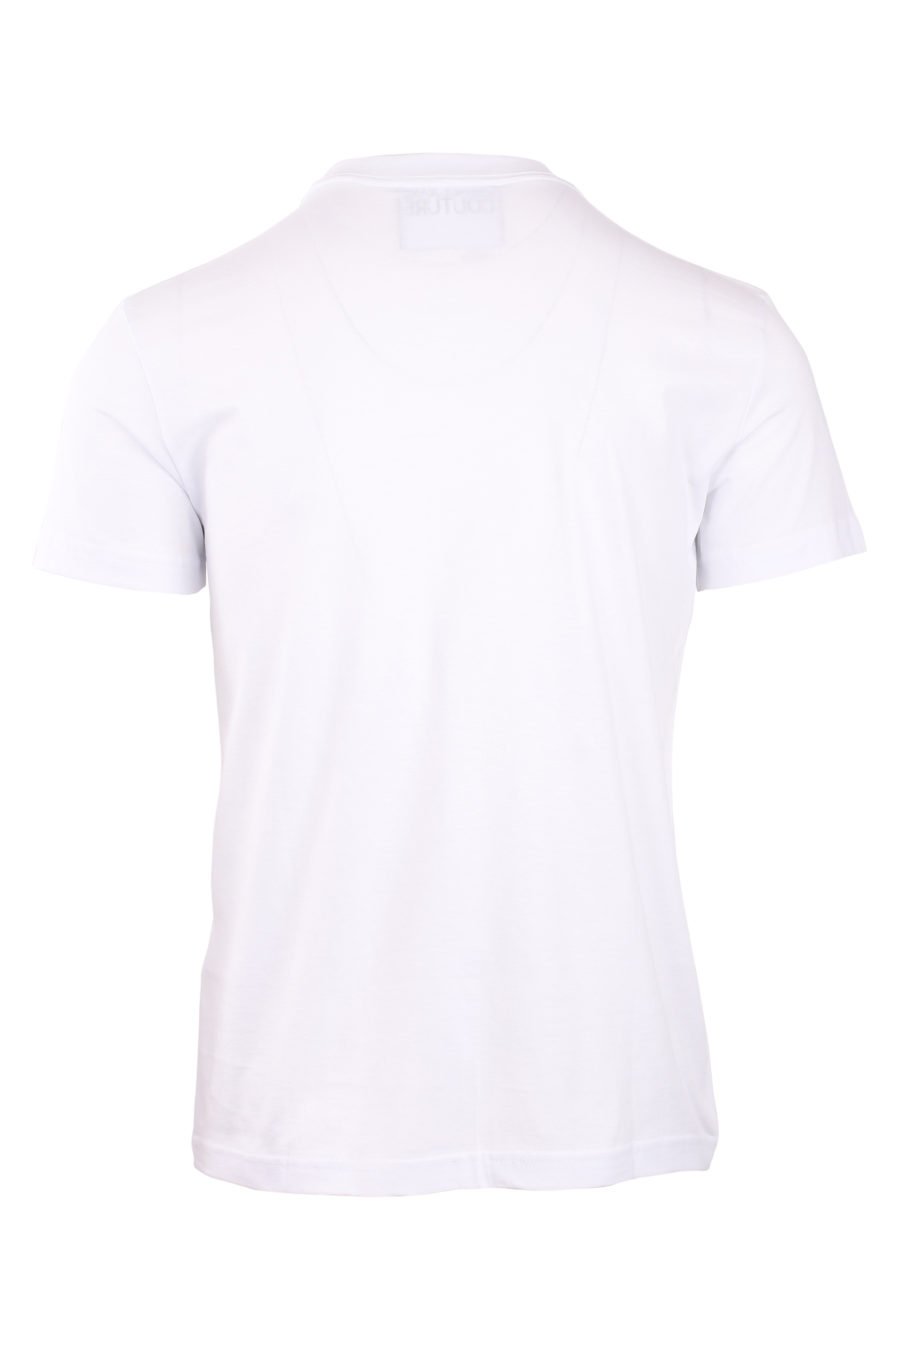 Camiseta blanca con maxilogo gris - IMG 0756